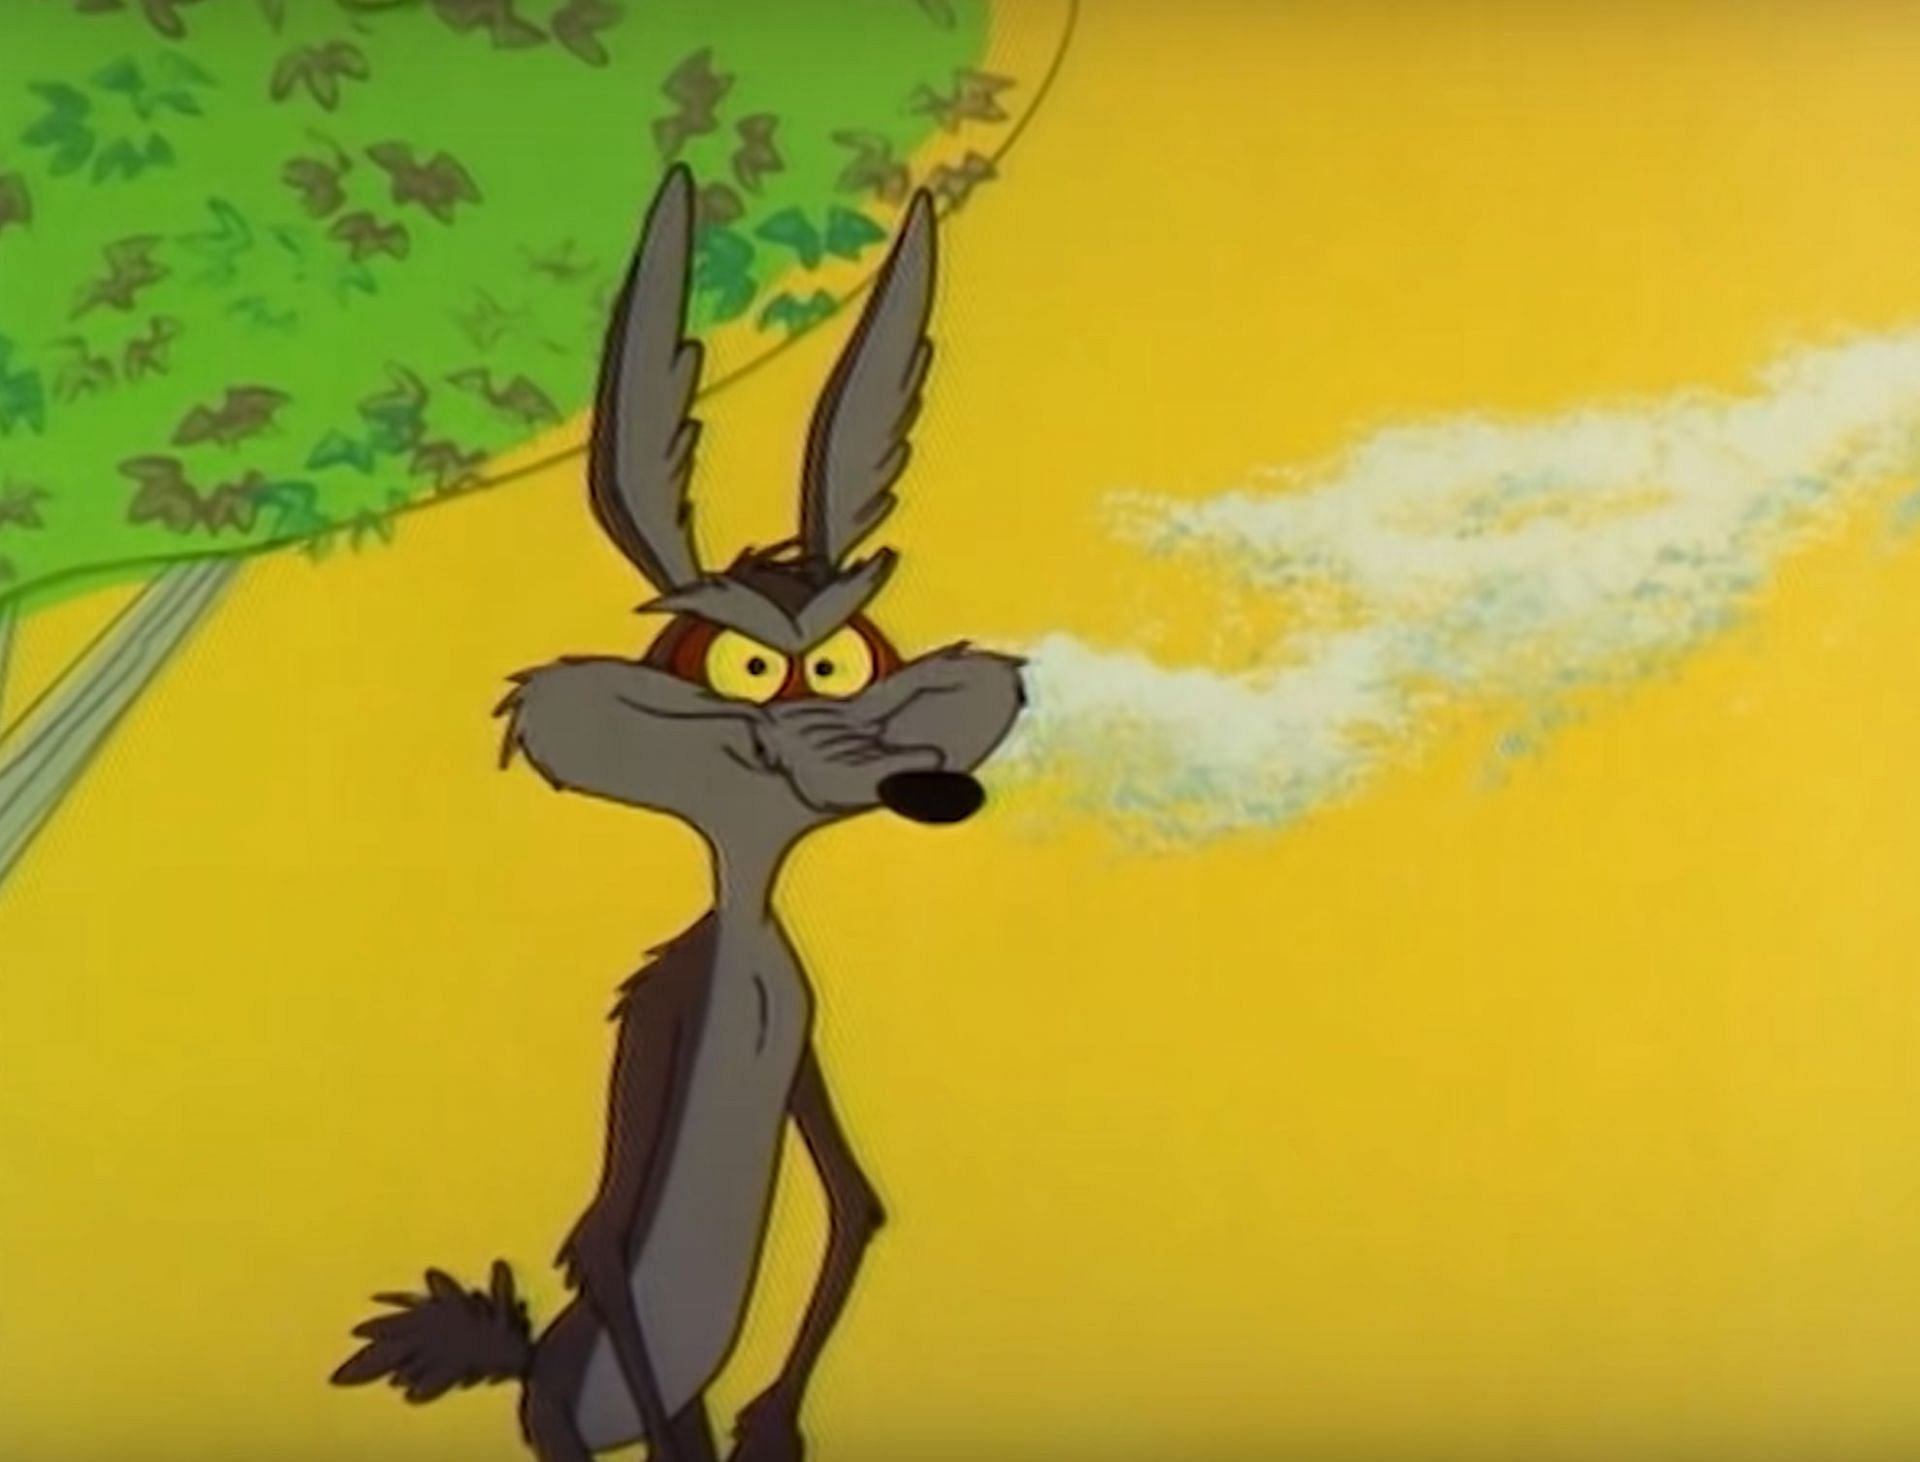 Coyote in Looney Tunes (Image via WB)